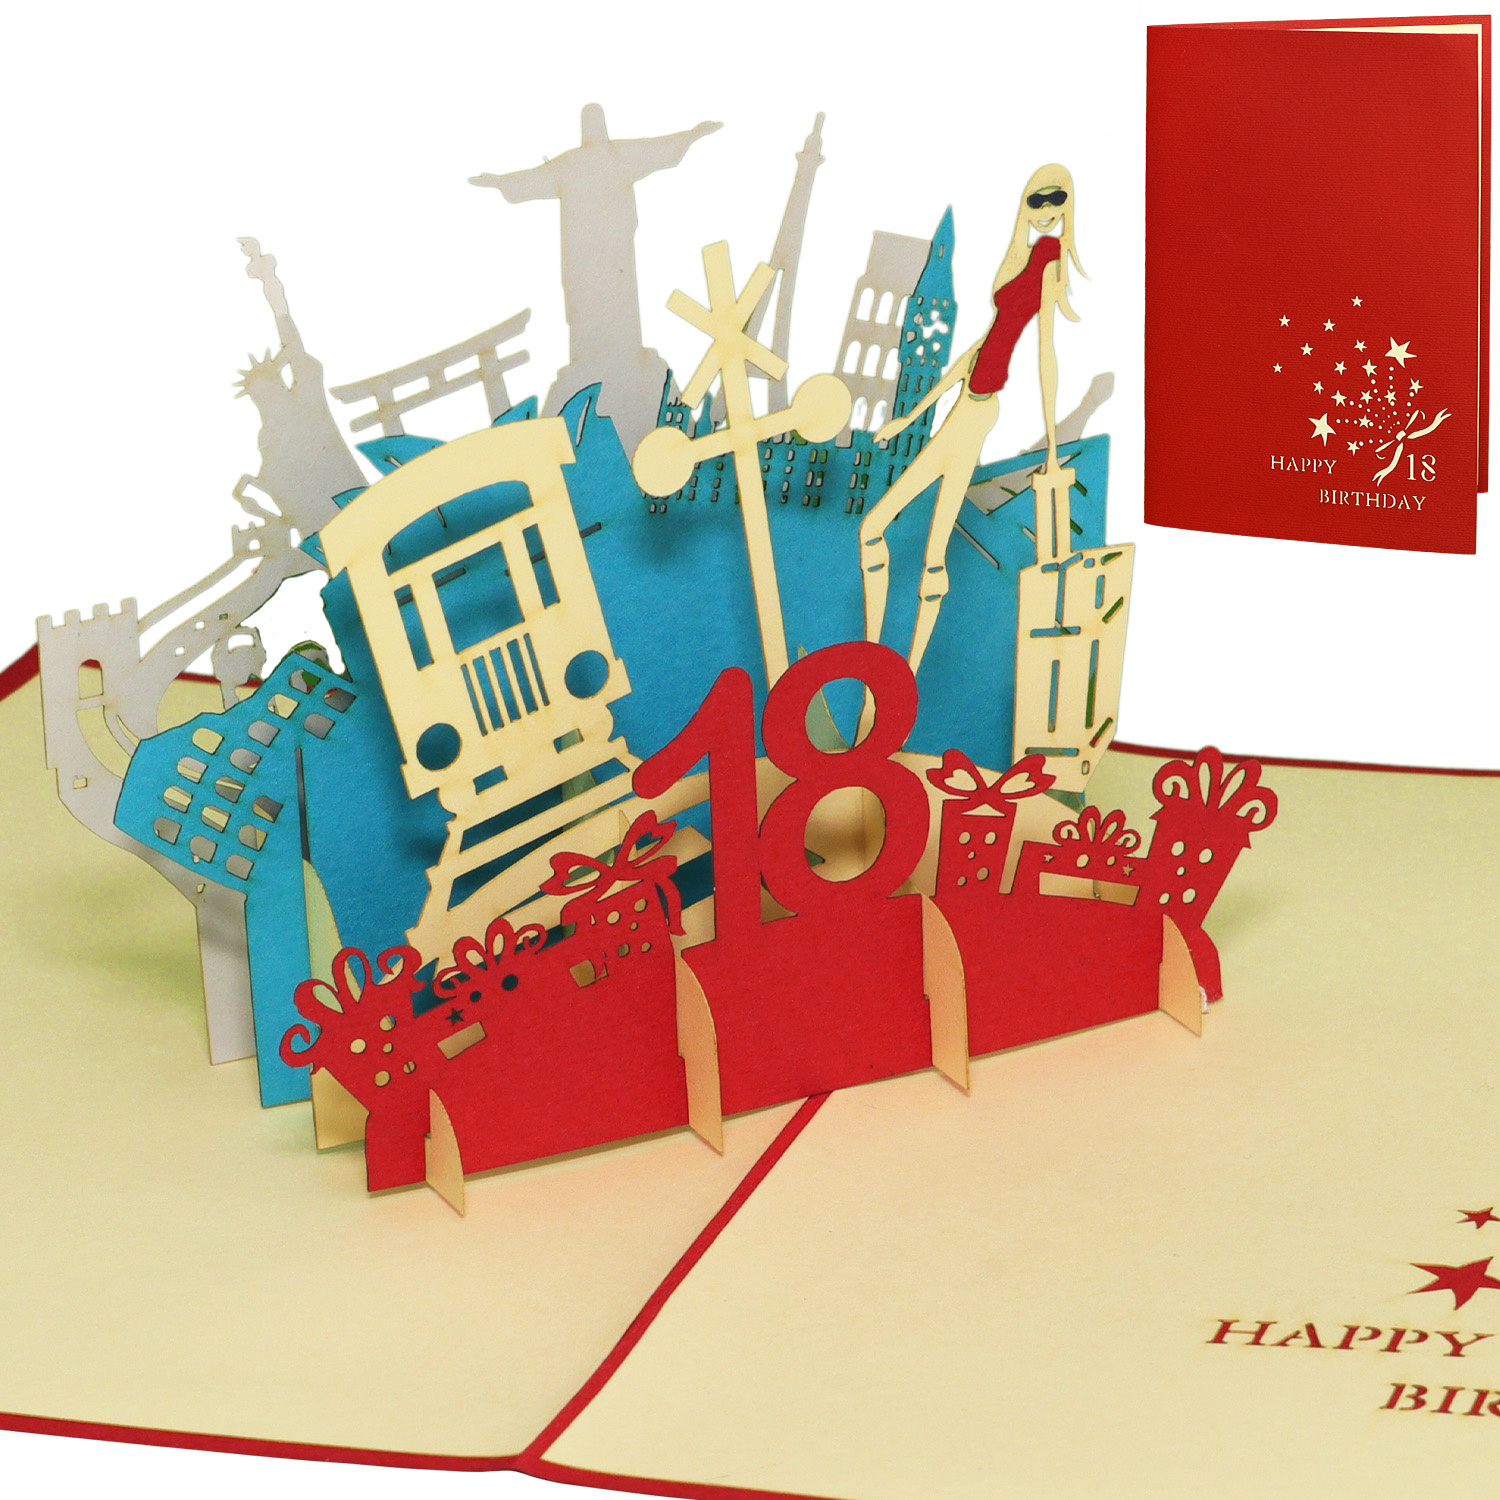 LINPOPUP Pop Up 3D Card, Birthday Card, Congratulations Card, 18th Birthday, LINPopUp®, N17